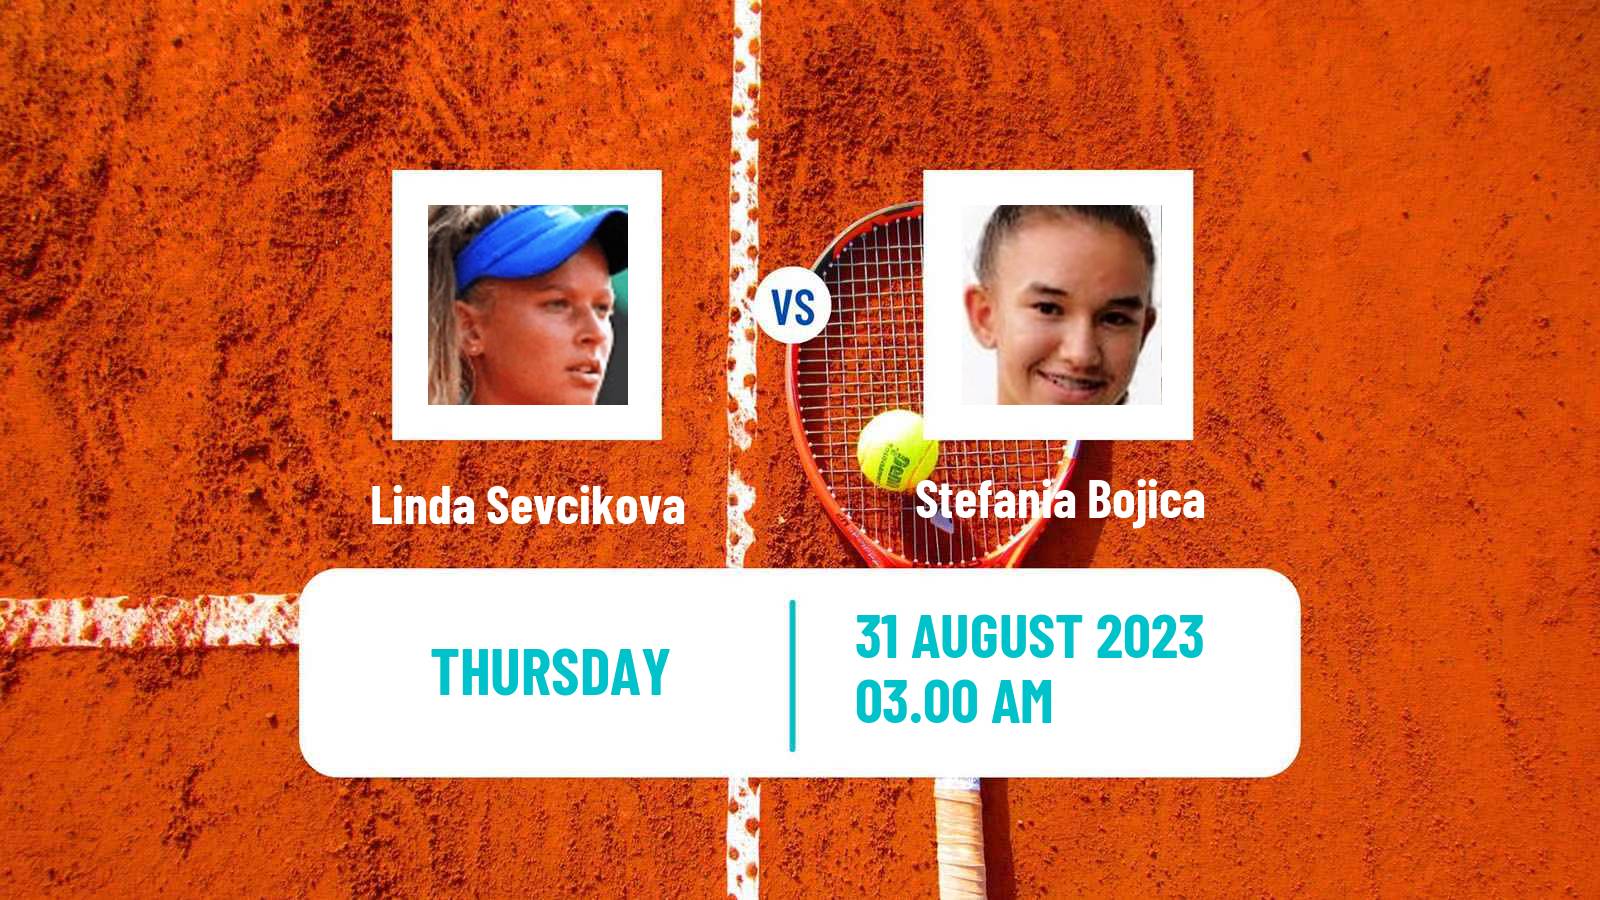 Tennis ITF W15 Brasov 2 Women Linda Sevcikova - Stefania Bojica